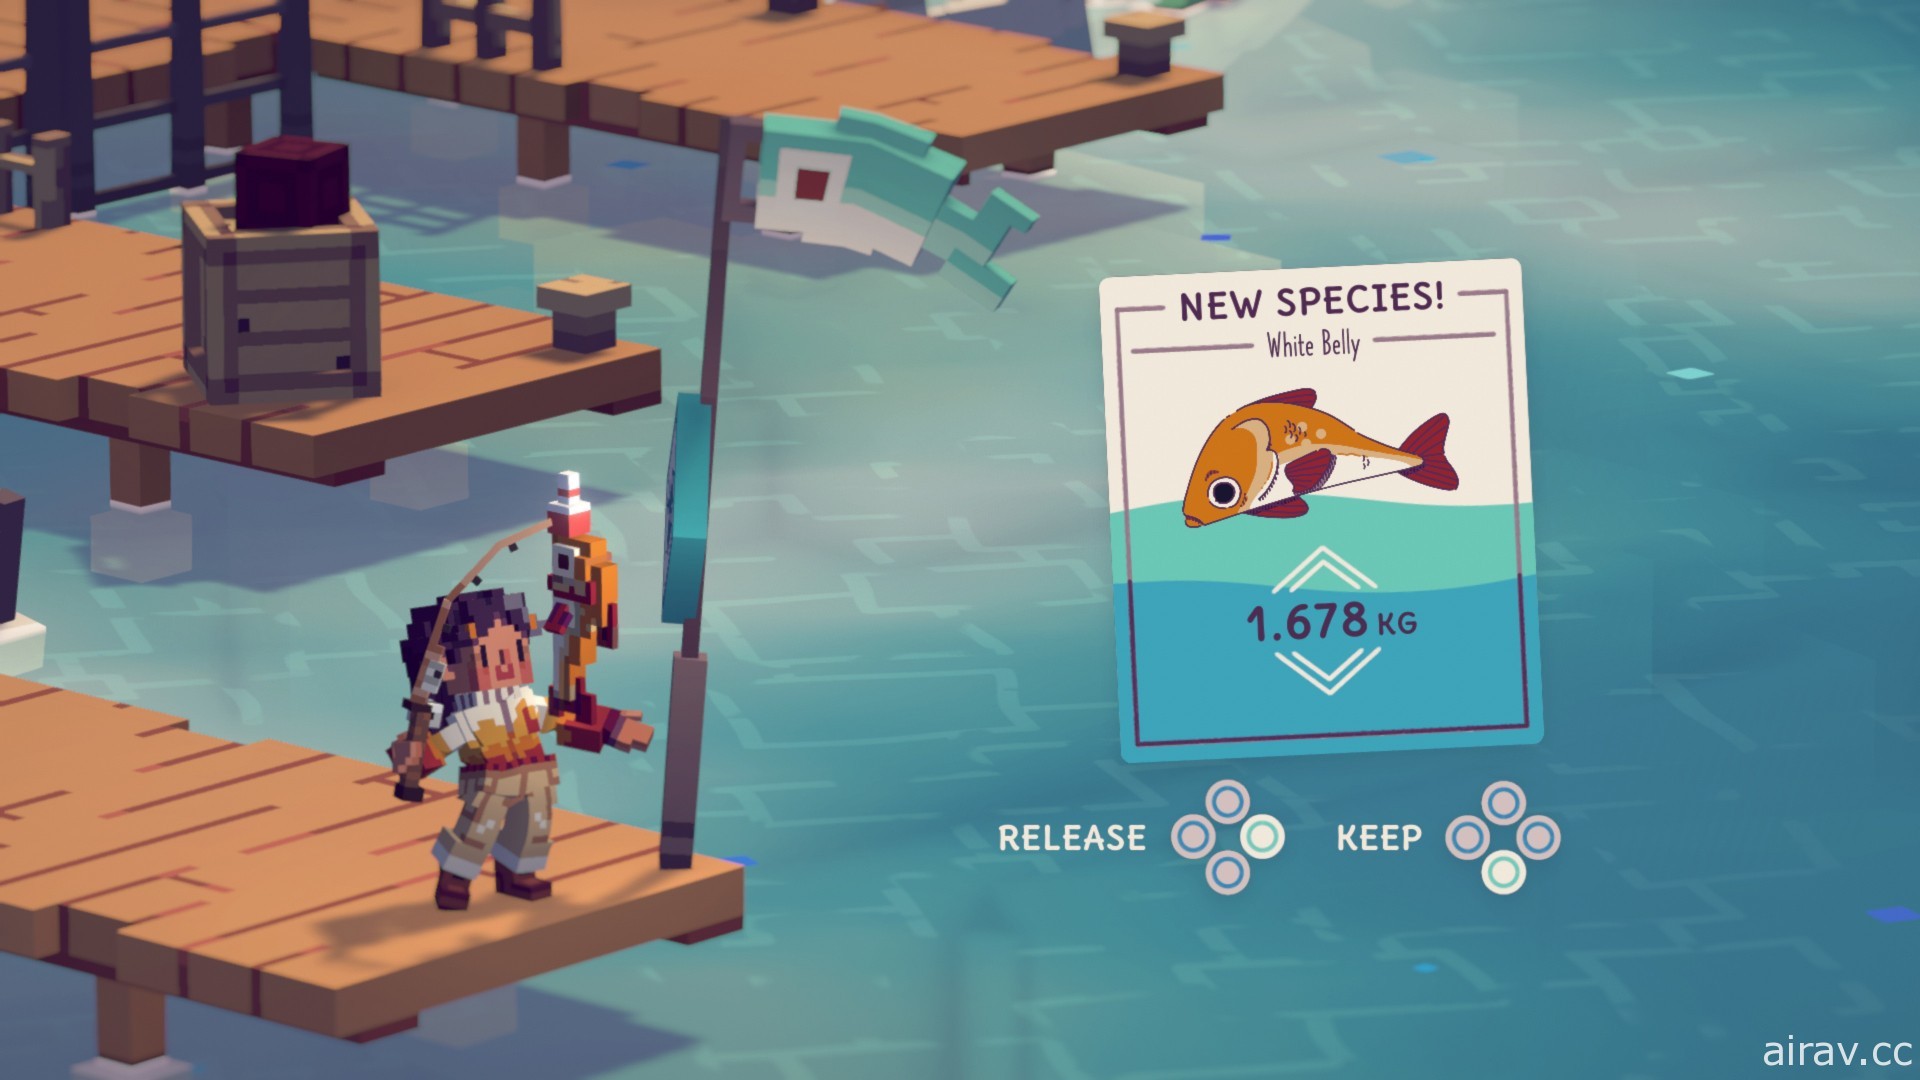 【GC 21】釣魚題材休閒冒險遊戲《月朧灣 Moonglow Bay》將於 10 月 7 日上市